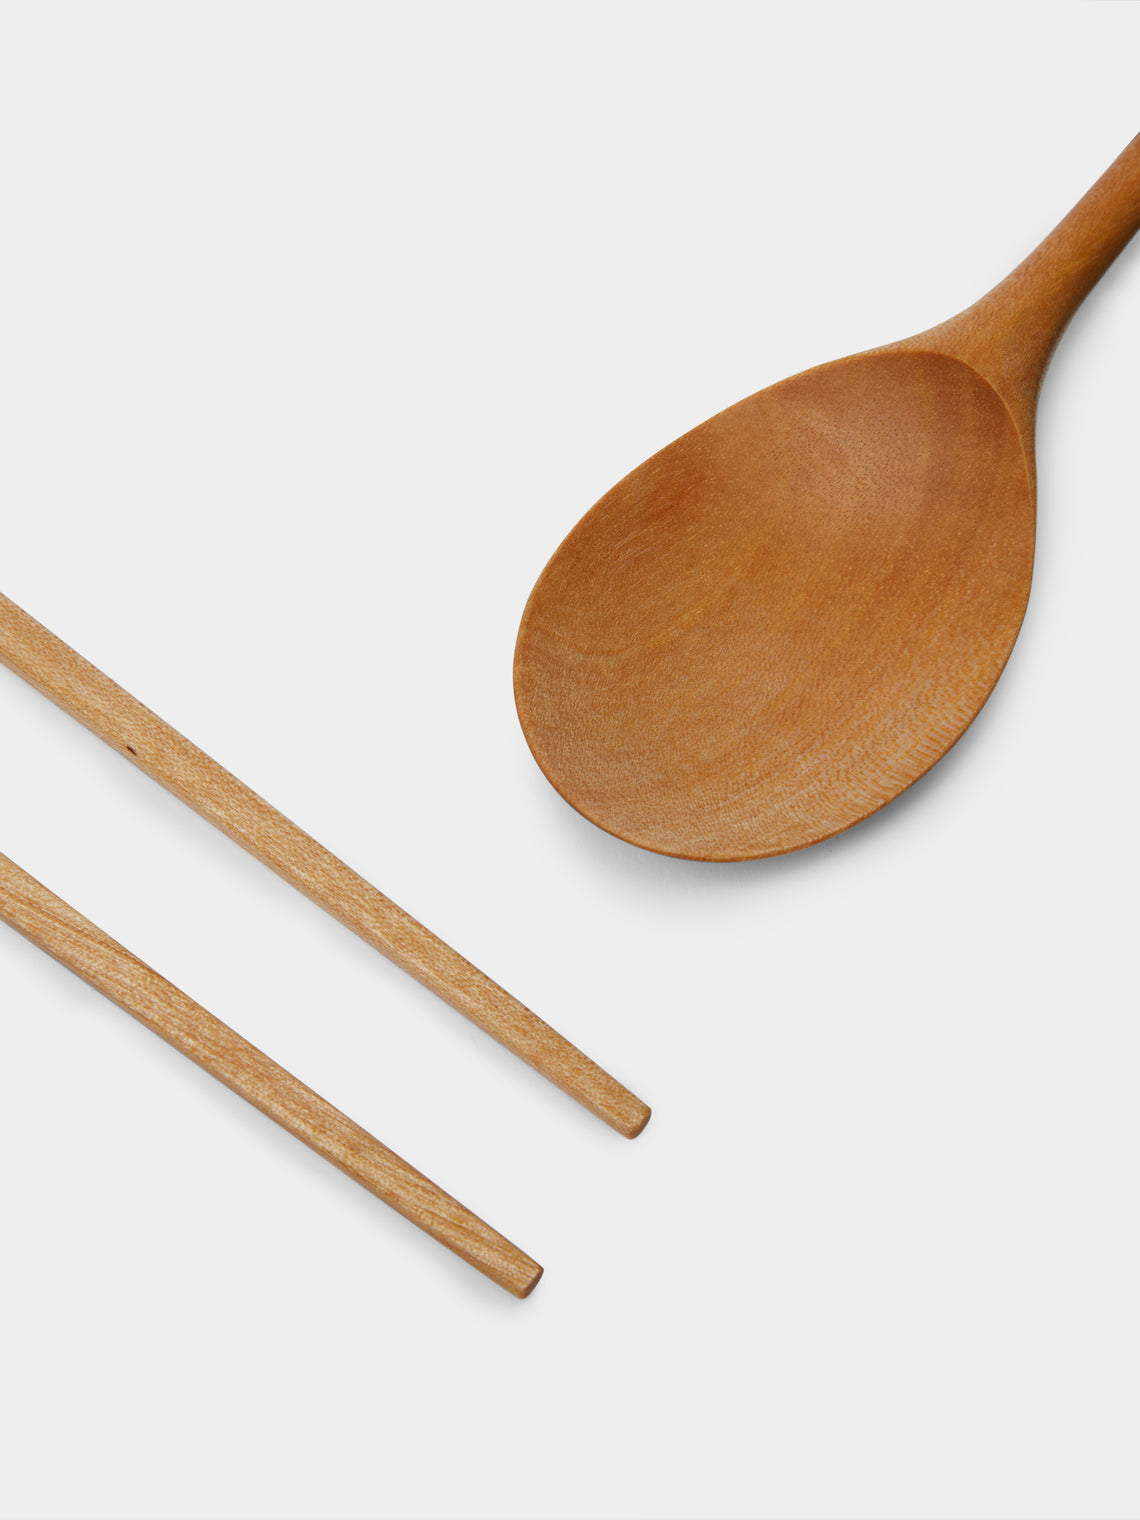 Jaejin Choi - Hand-Carved Birch Spoon and Chopsticks Set -  - ABASK